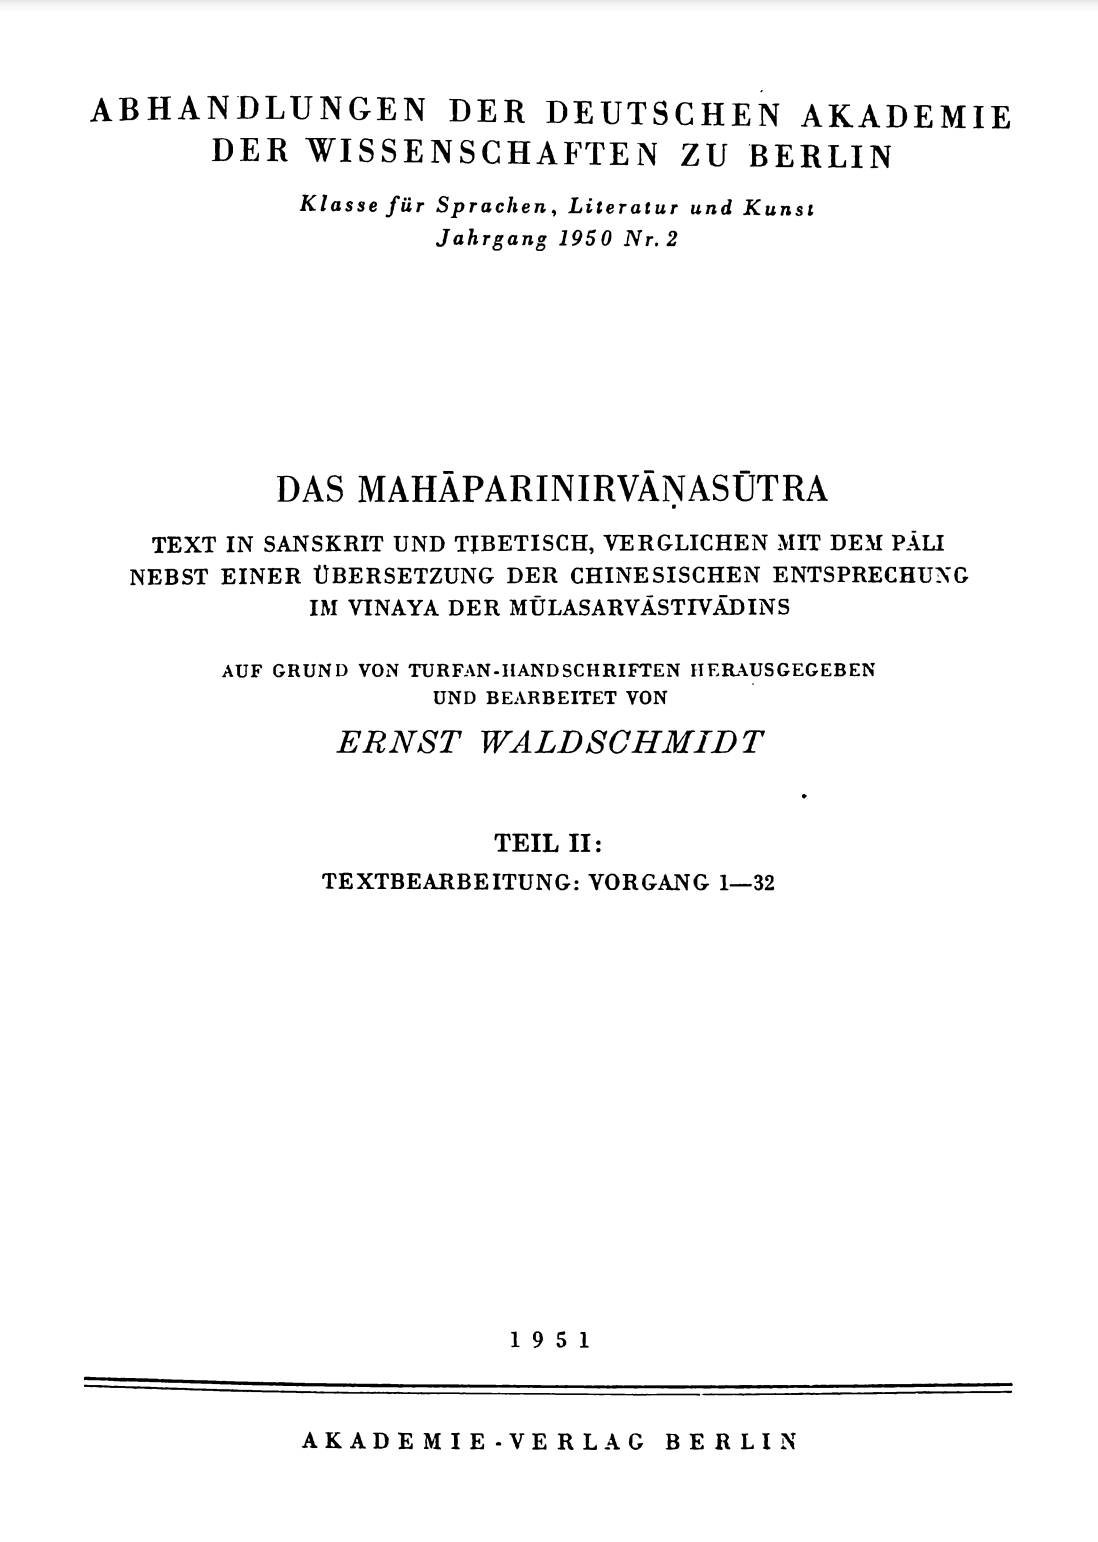 Das Mahaparinirvanasutra Vol 2-front.jpg